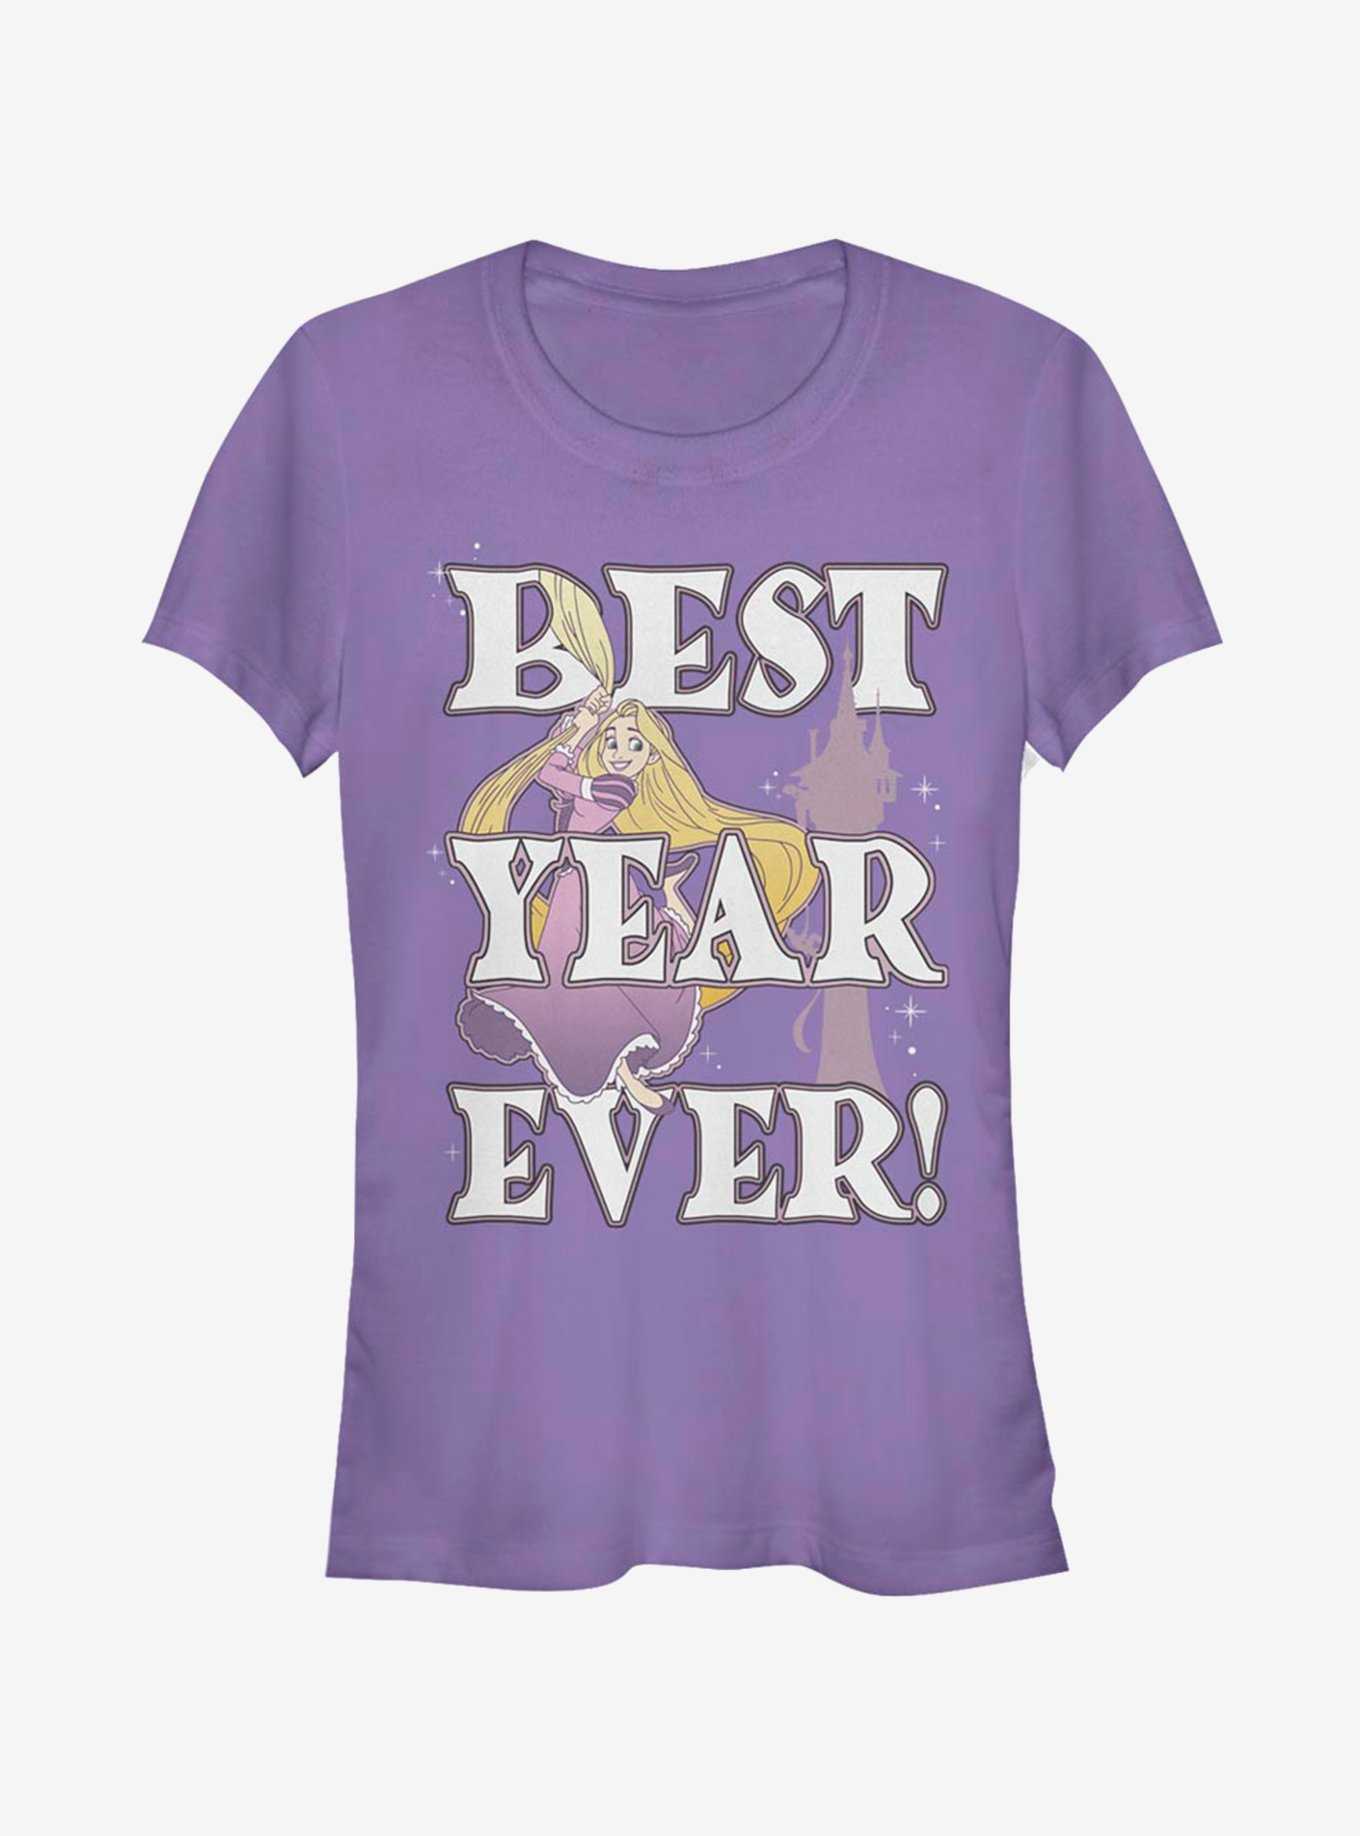 Disney Tangled Rapunzel Best Year Girls T-Shirt, , hi-res